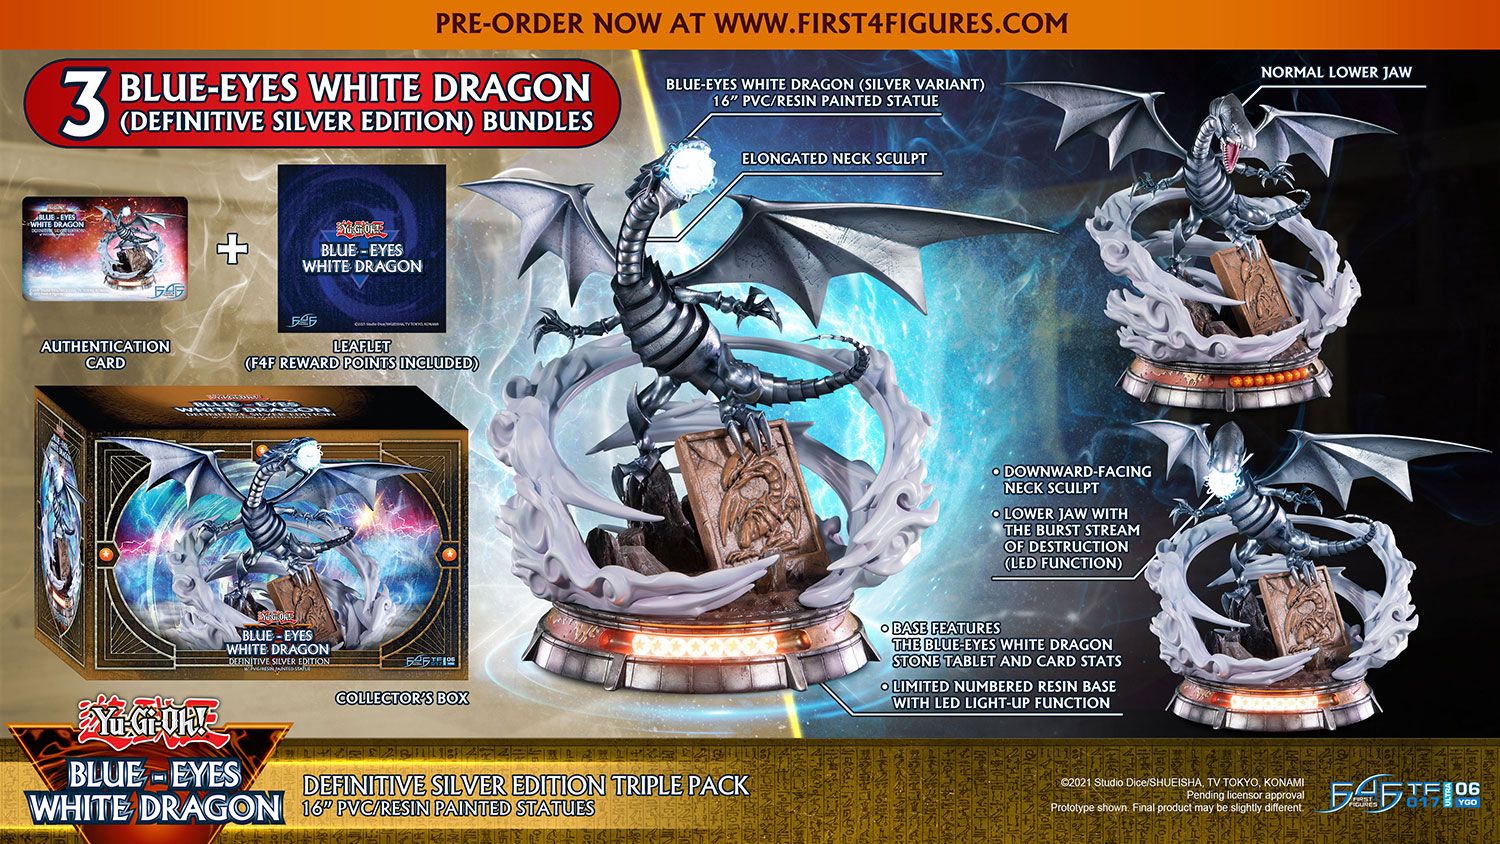 Blue-Eyes White Dragon (Definitive Silver Edition Triple Pack)